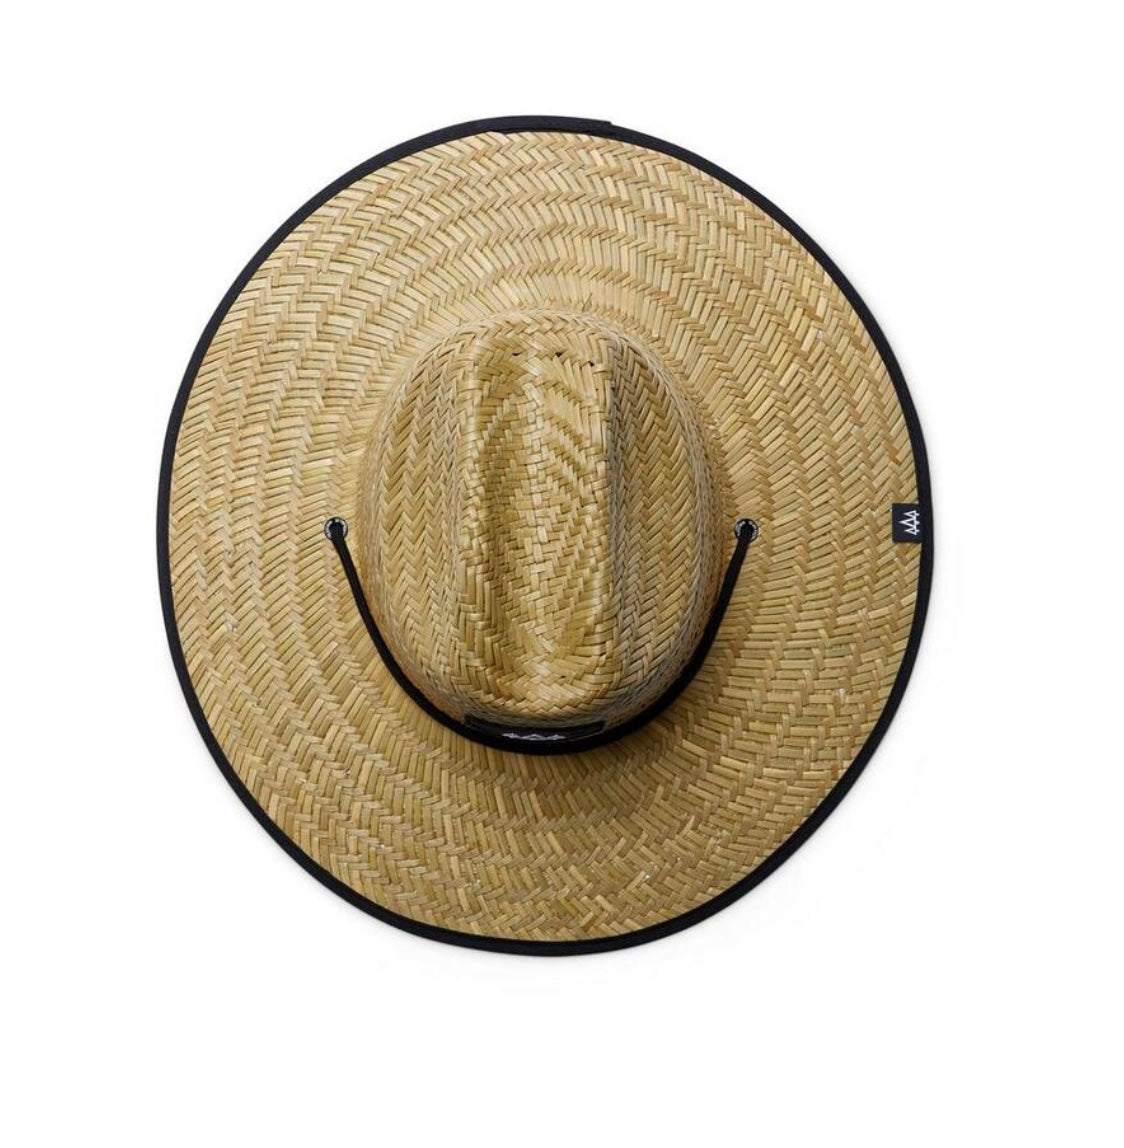 Midnight Hemlock Straw Hat